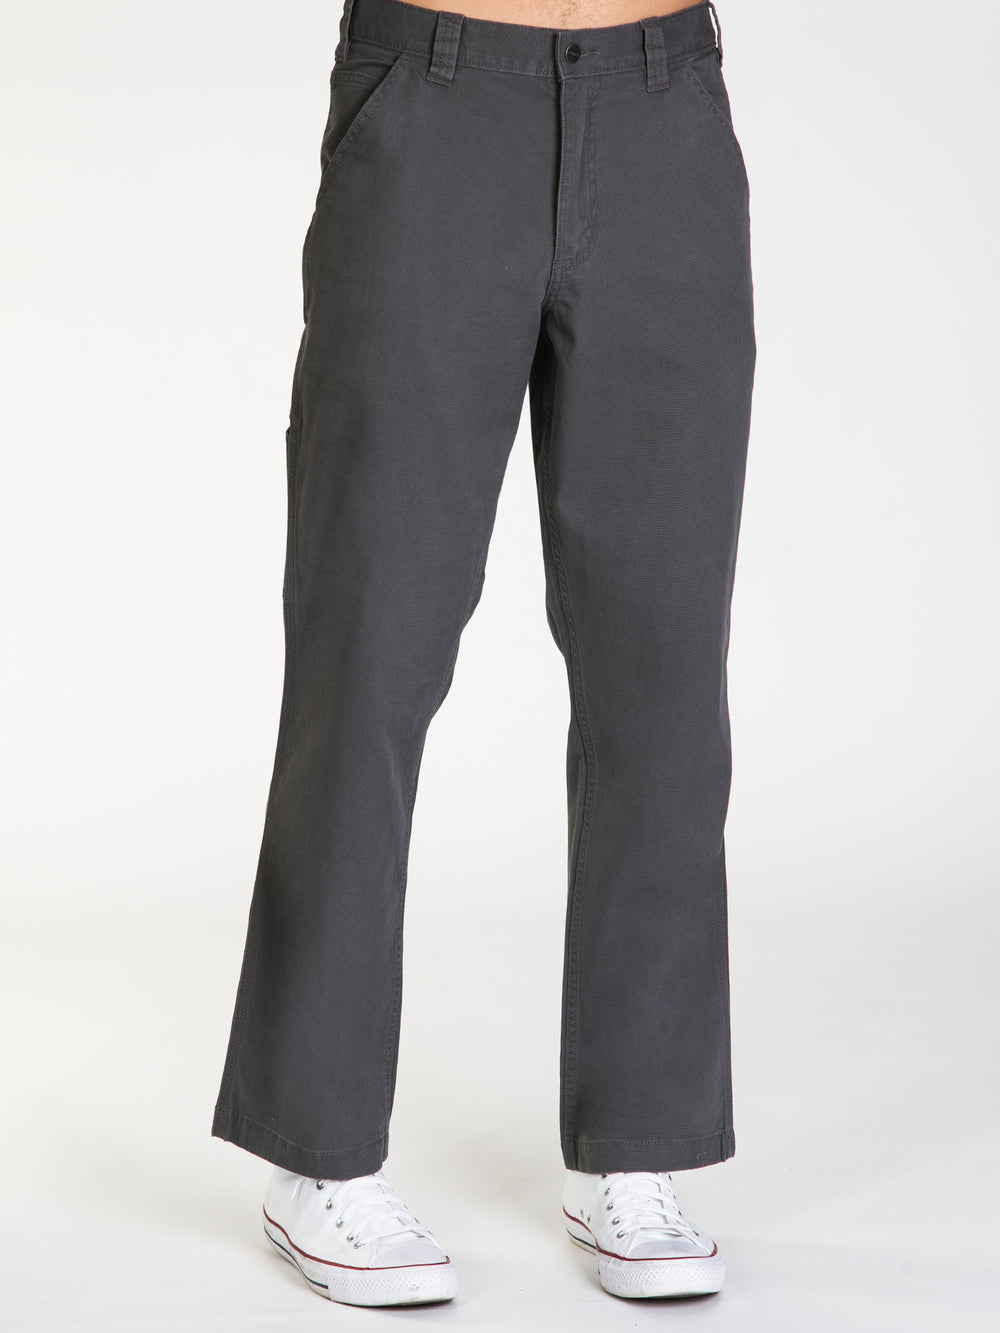 Carhartt Women's Original Fit Rugged Professional Pant Work Utility